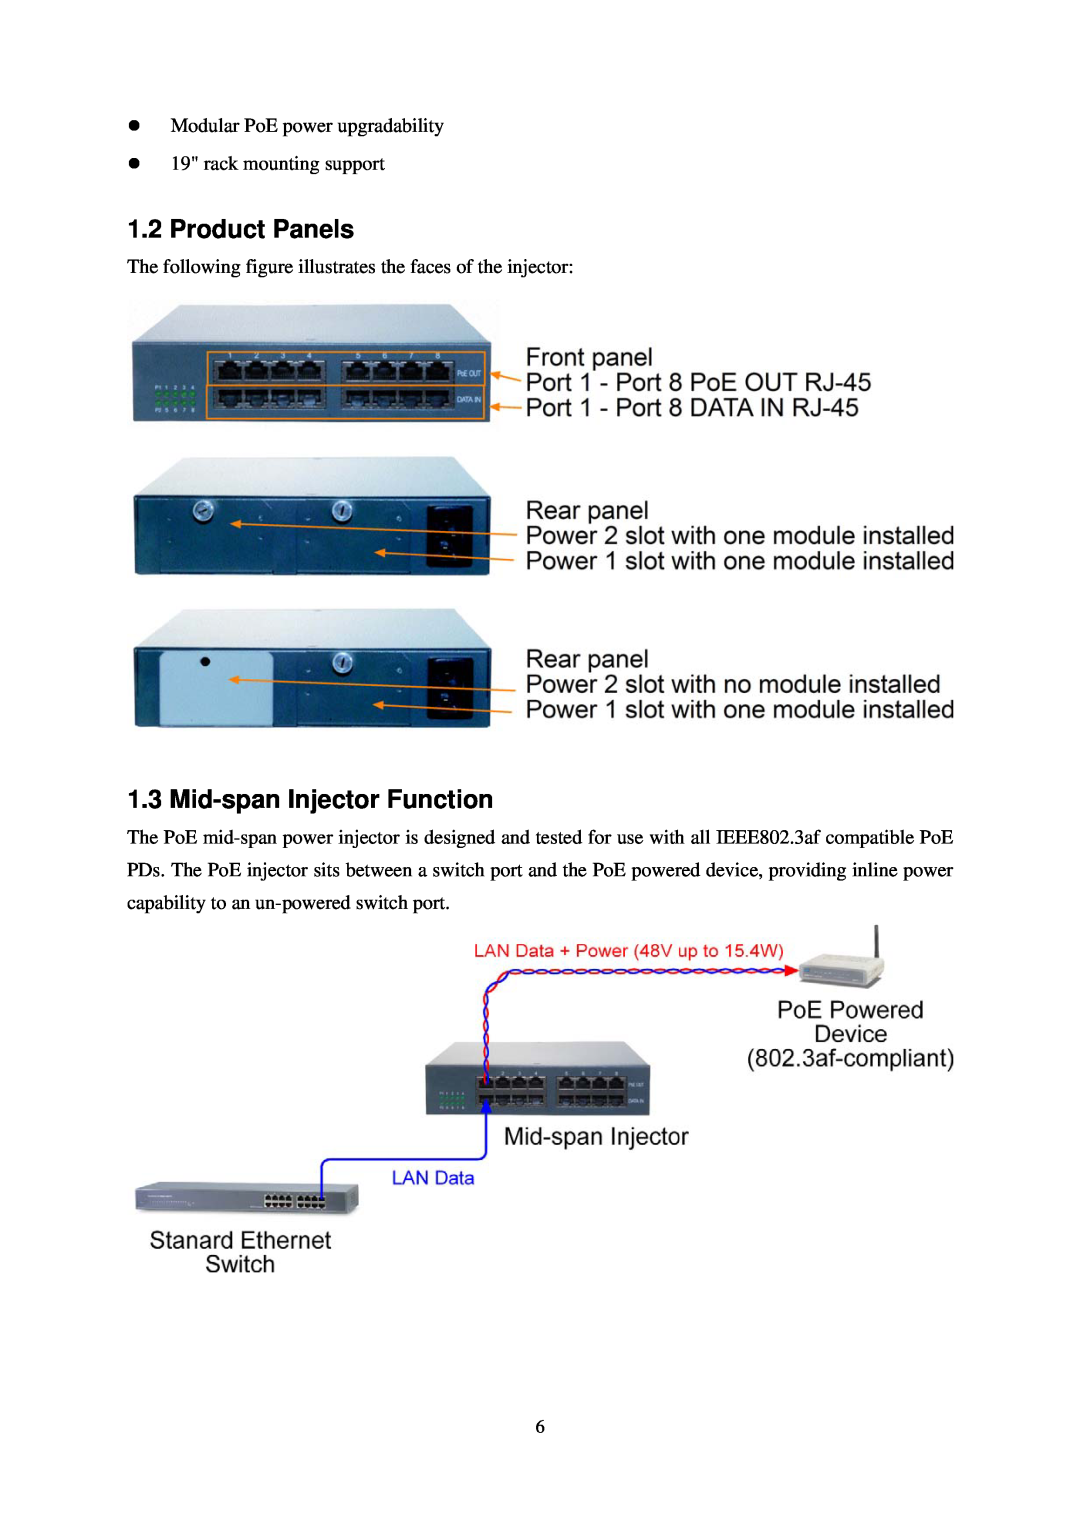 KTI Networks KPOE-800-1P, KPOE-800-2P manual Product Panels, Mid-span Injector Function 